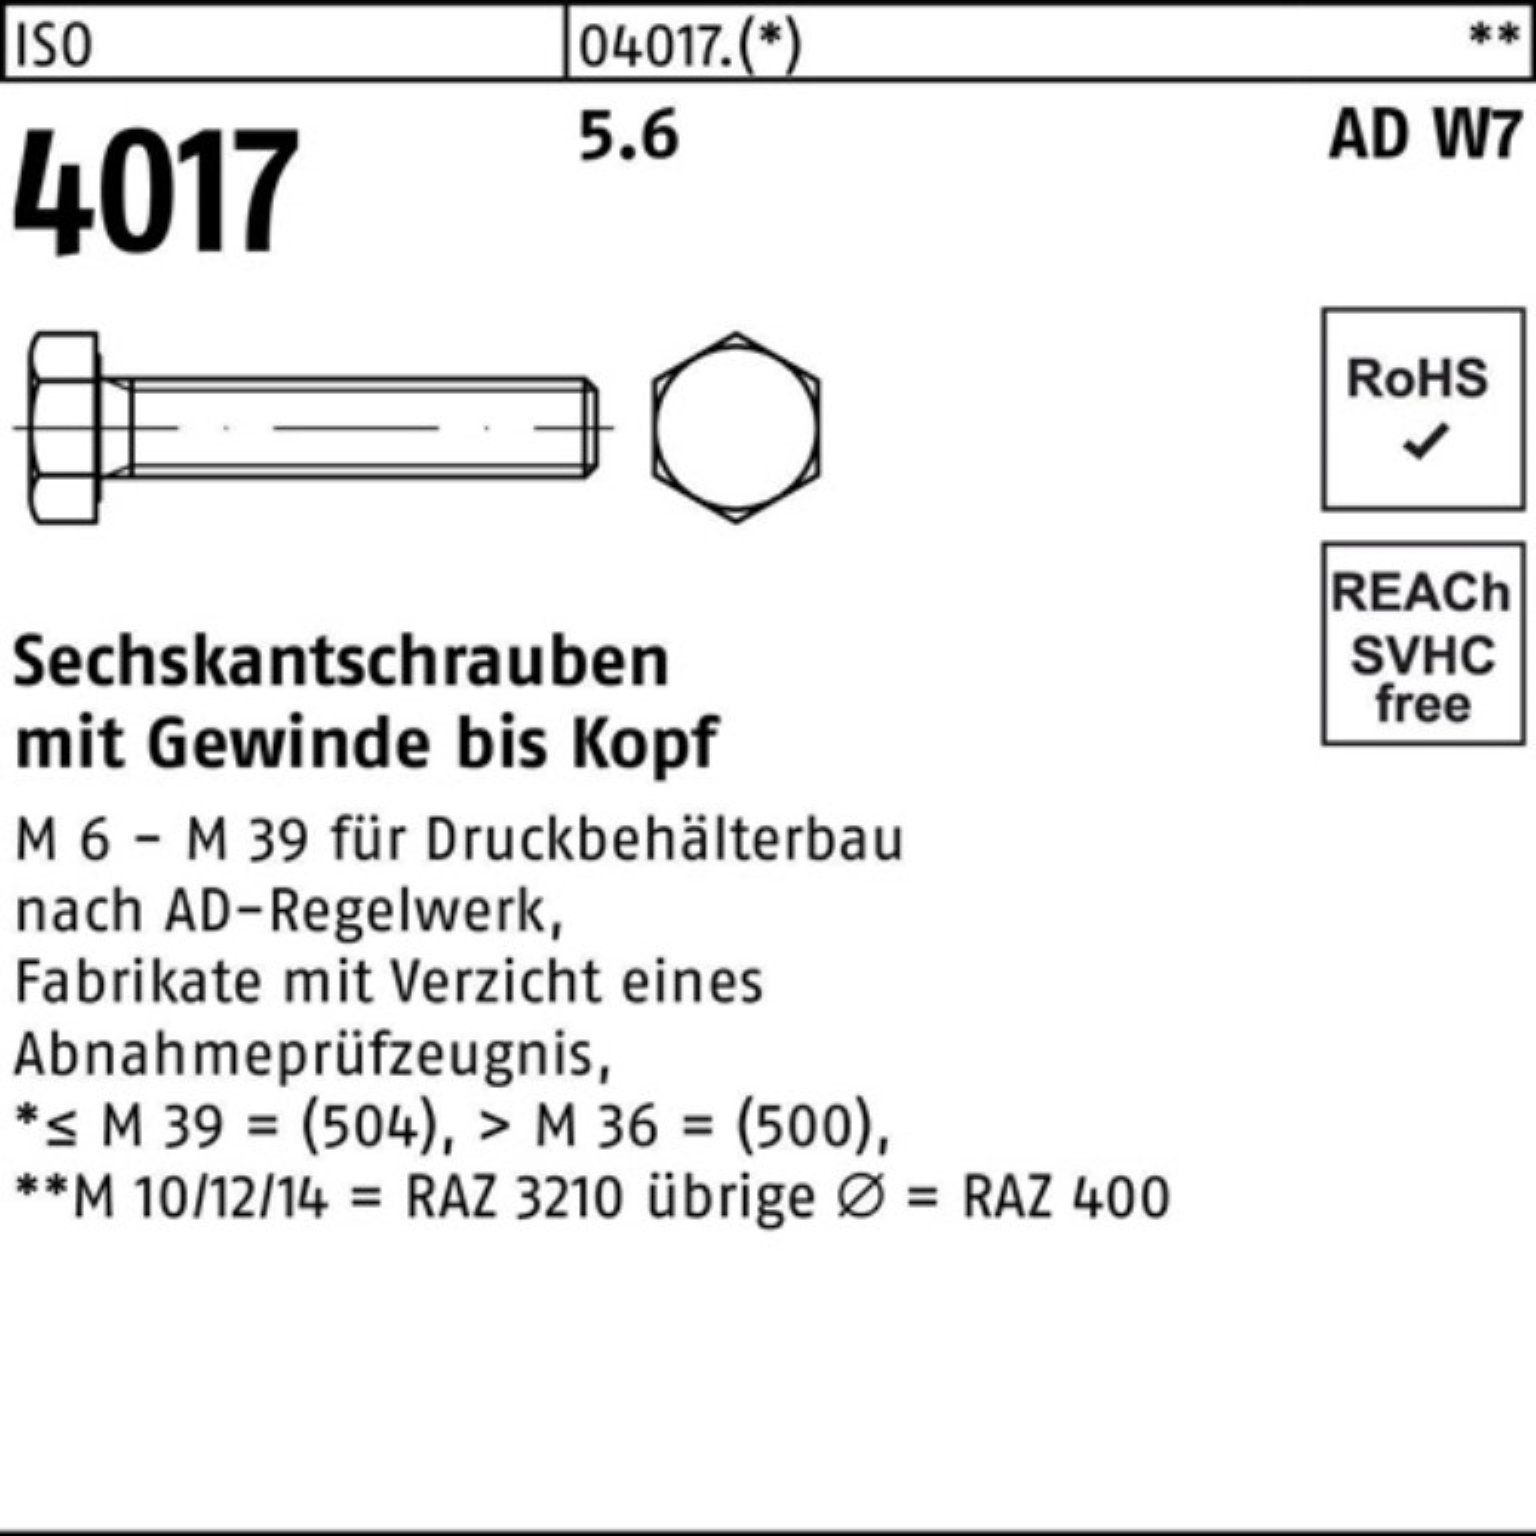 Bufab Sechskantschraube 100er Pack Sechskantschraube ISO 4017 VG M10x 60 5.6 AD W7 100 Stück